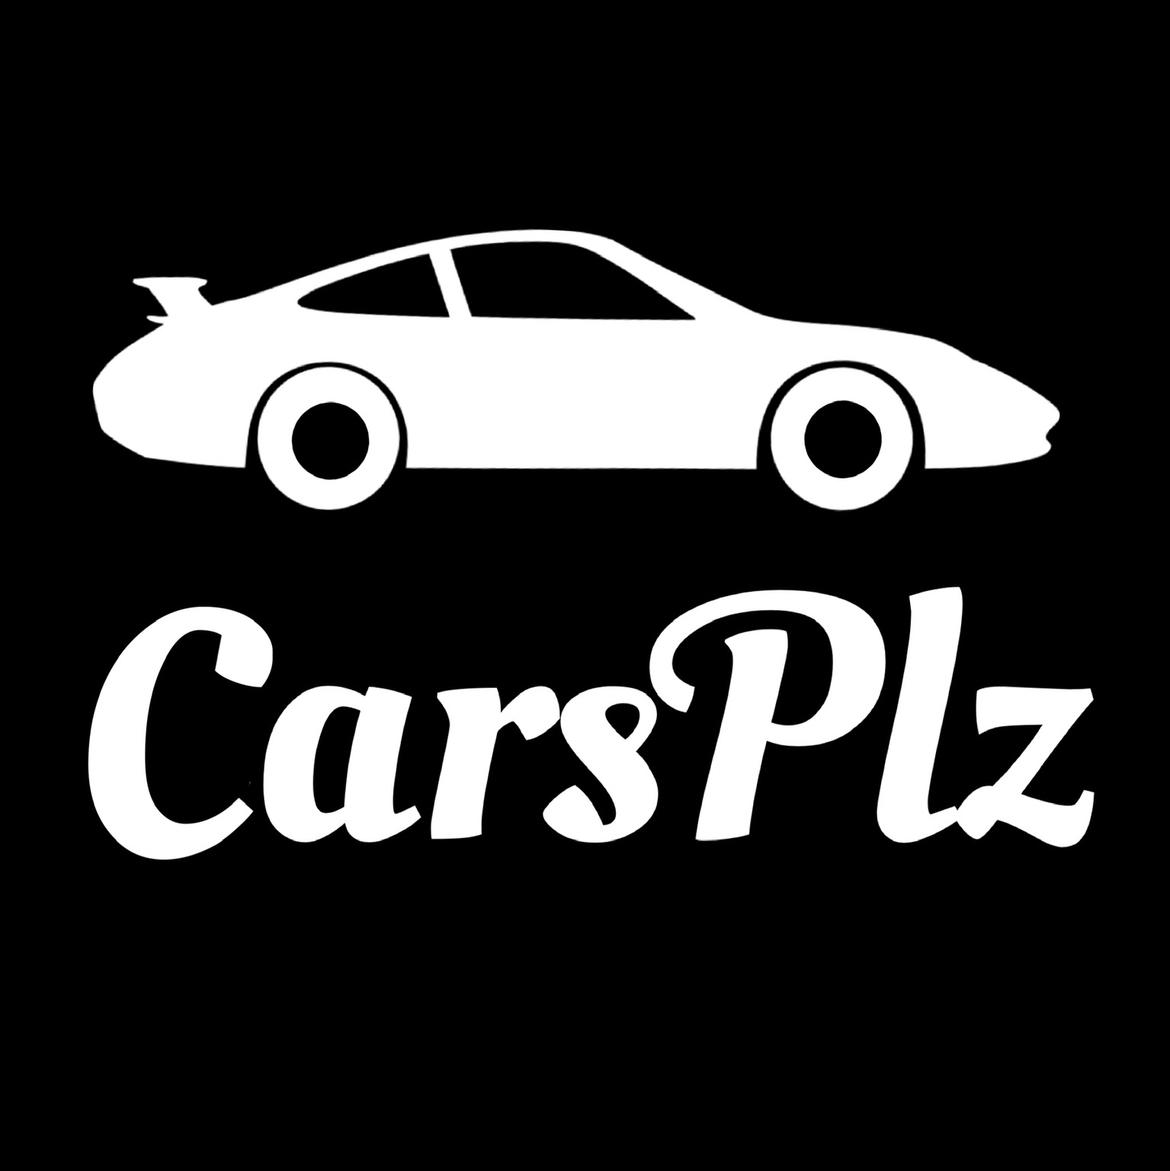 CarsPlz's images